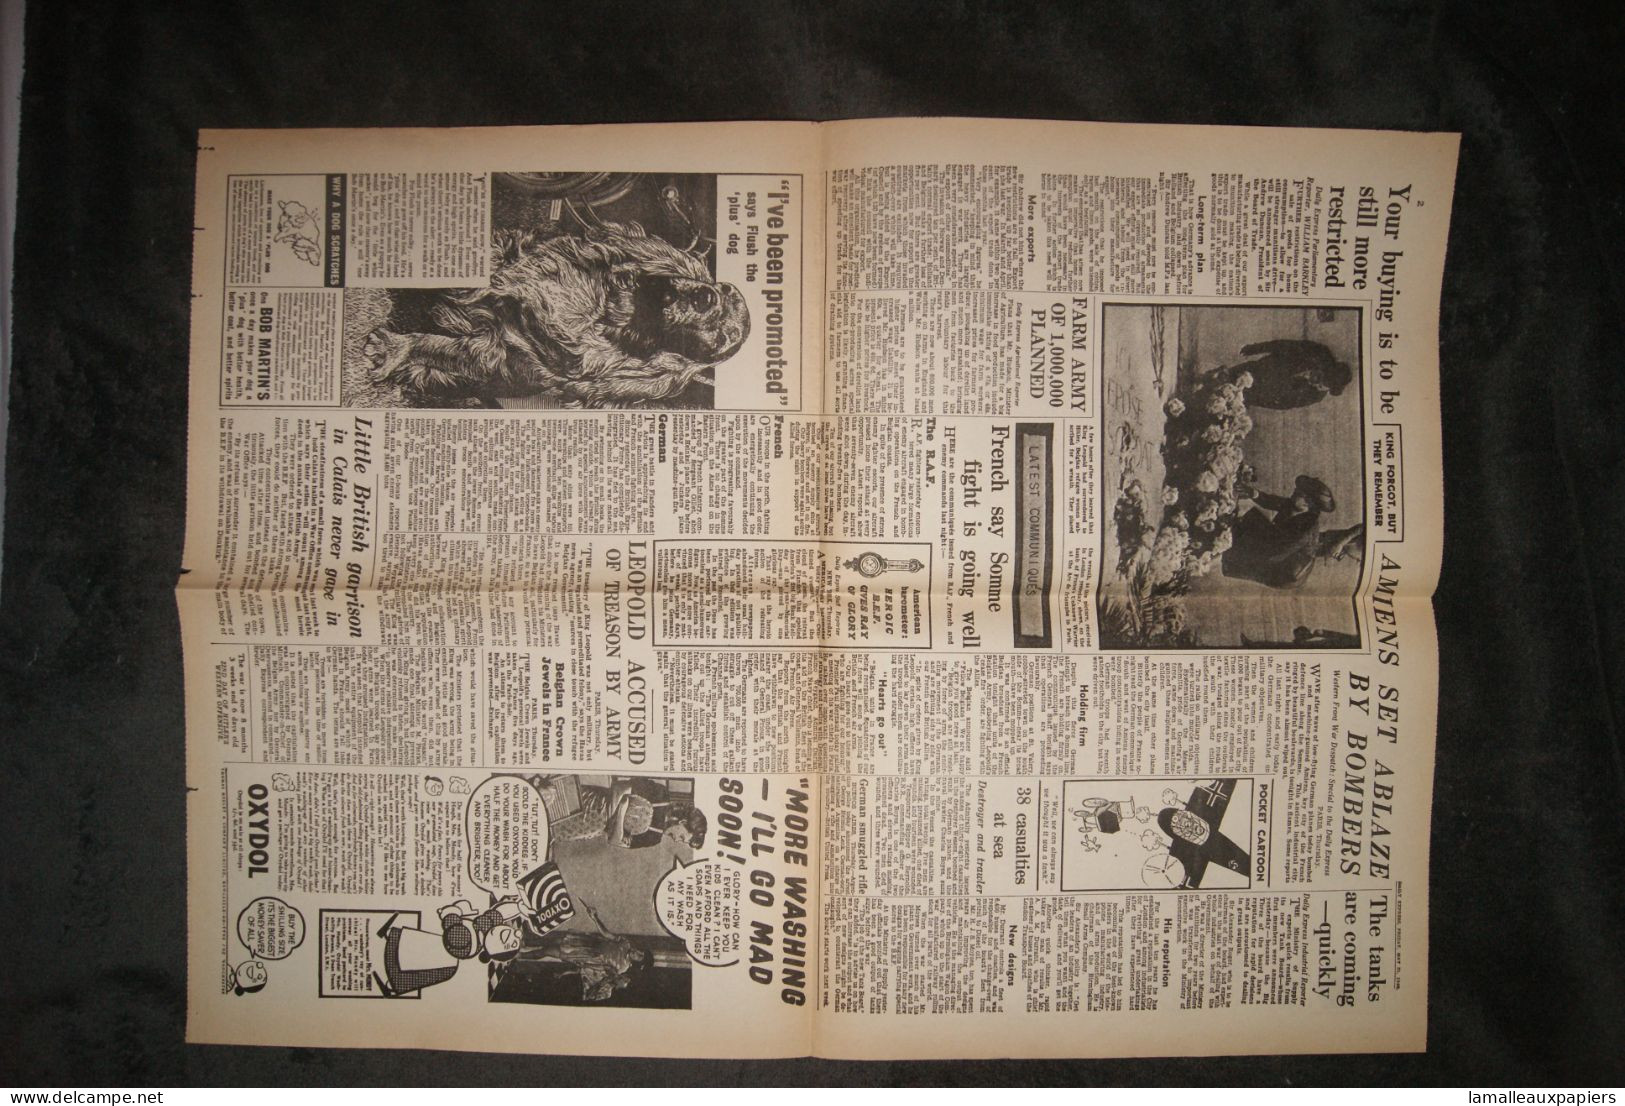 Daily Express : Suite Opération Dynamo (31/05/1940) Fac Similé - Military/ War